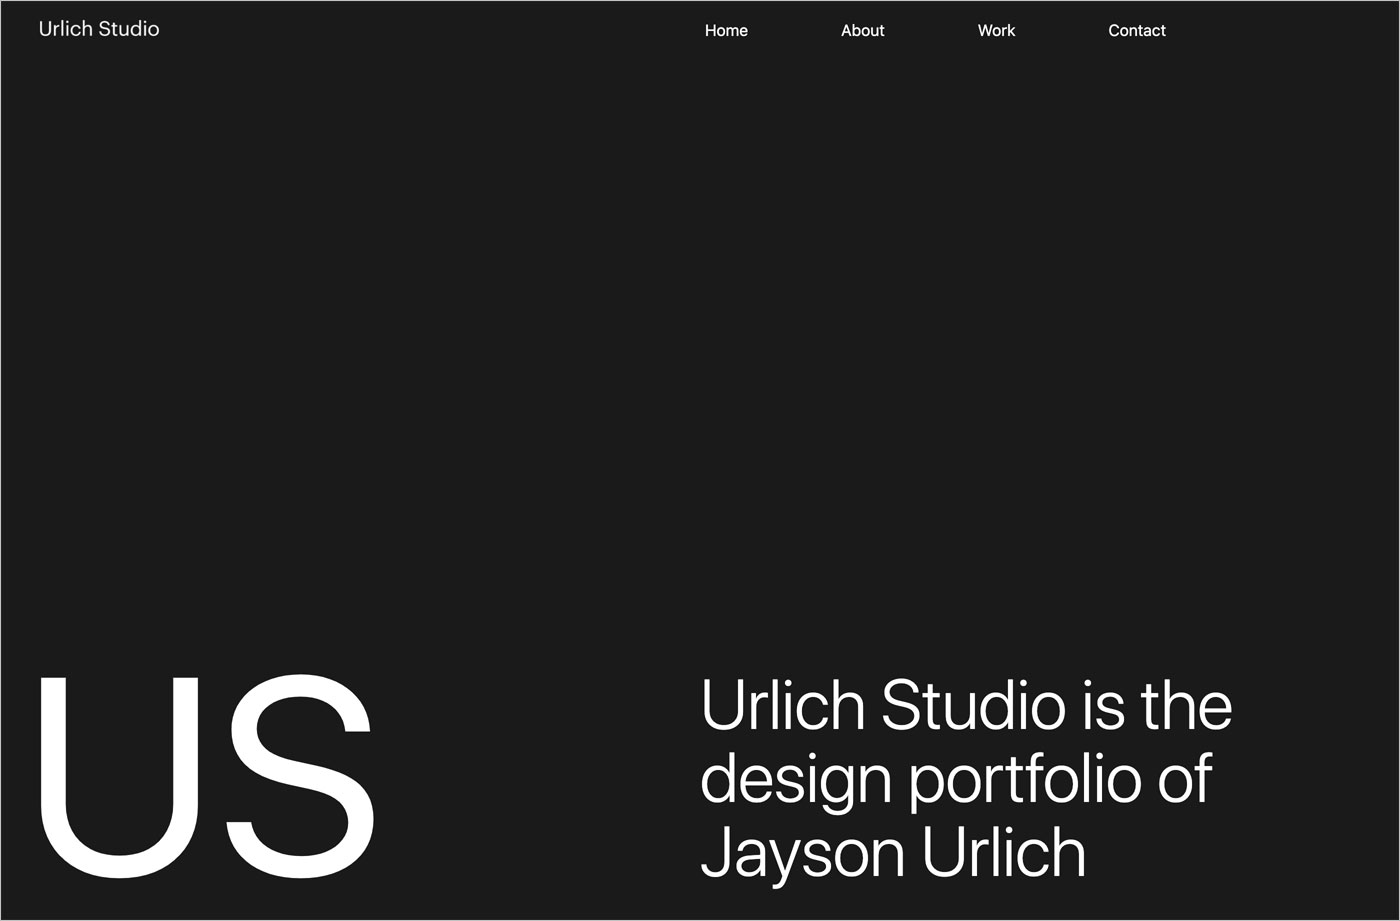 Urlich Studioウェブサイトの画面キャプチャ画像